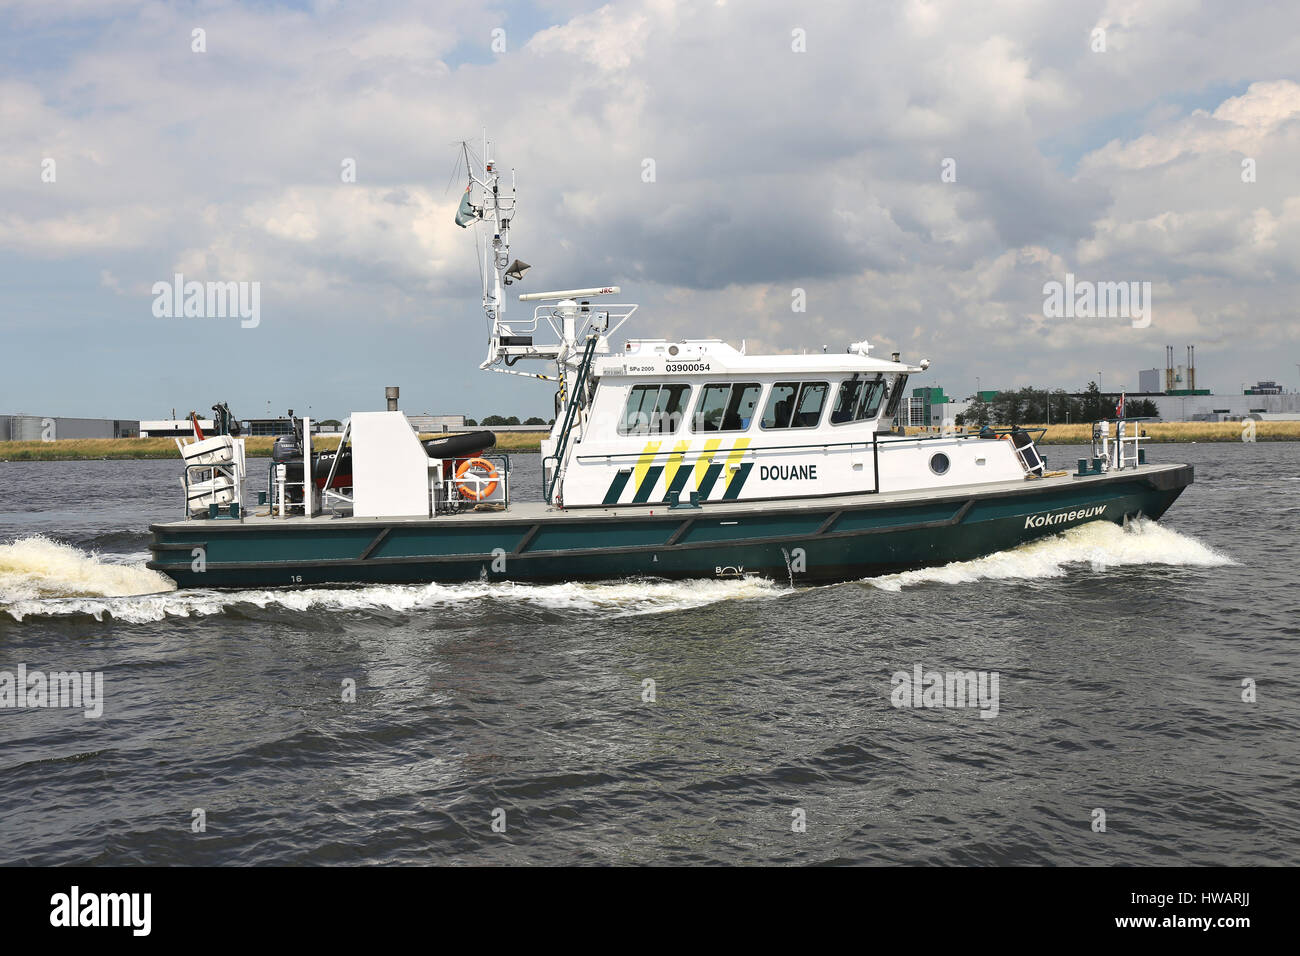 Dutch customs boat KOKMEEUW (seagull) on patrol Stock Photo